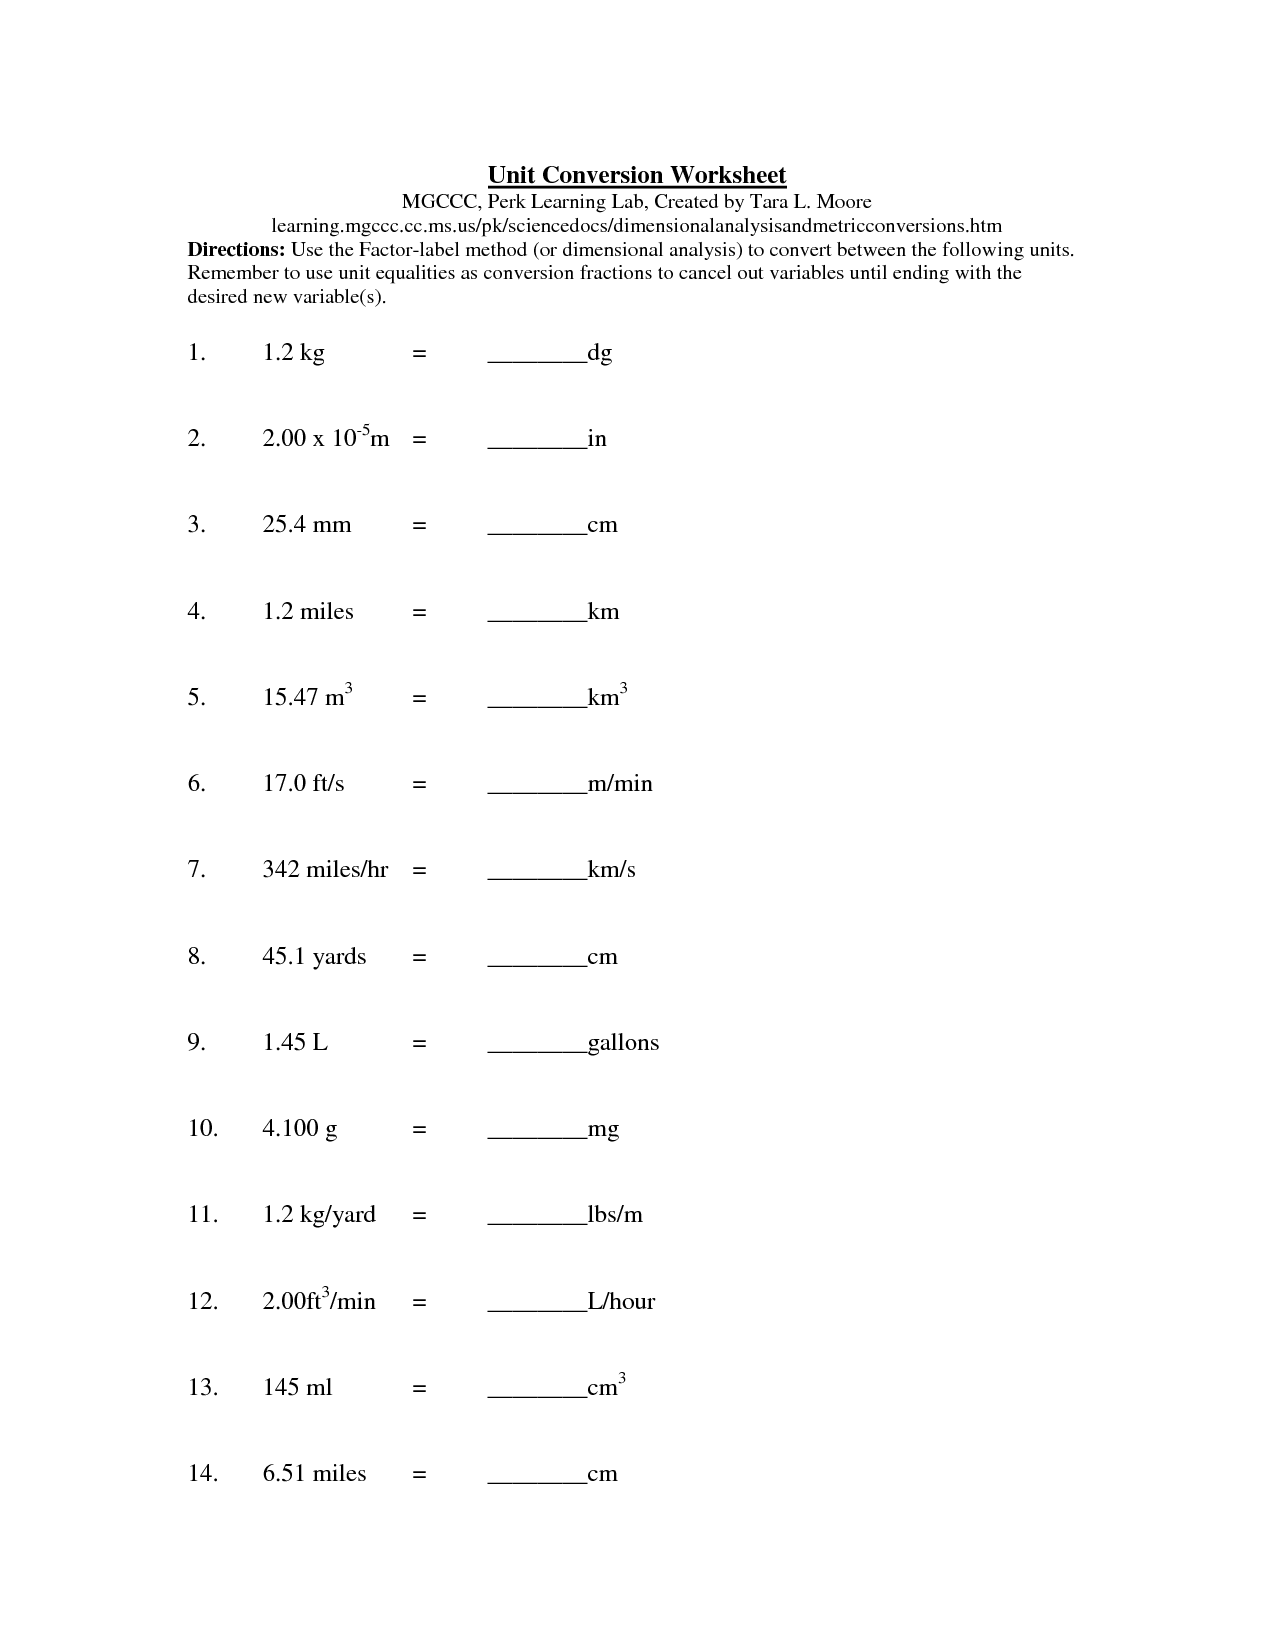 conversion-factors-worksheet-chemistry-pdf-factorworksheets